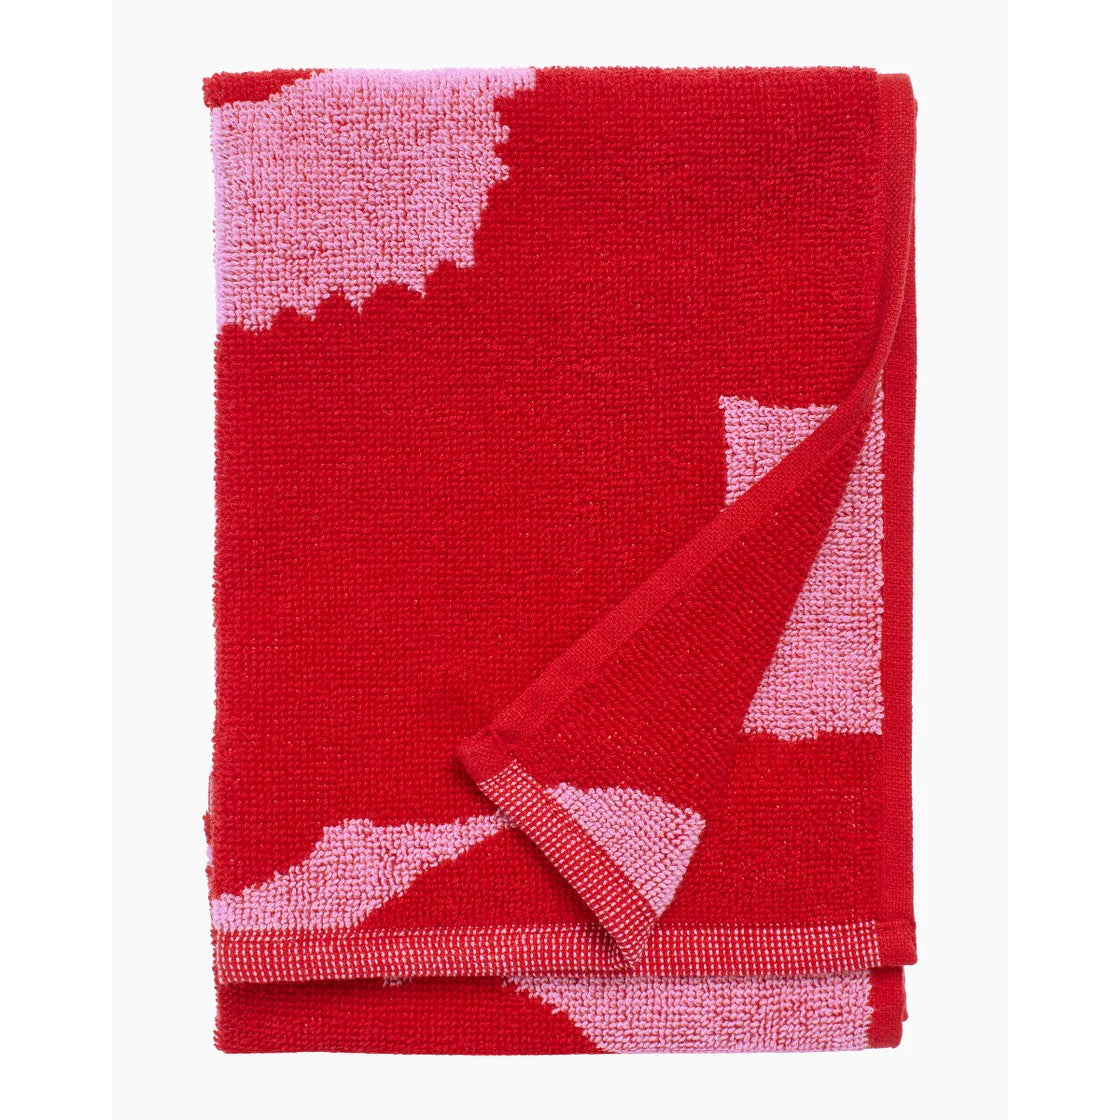 Unikko guest towel 30x50 cm red pink 063631-331